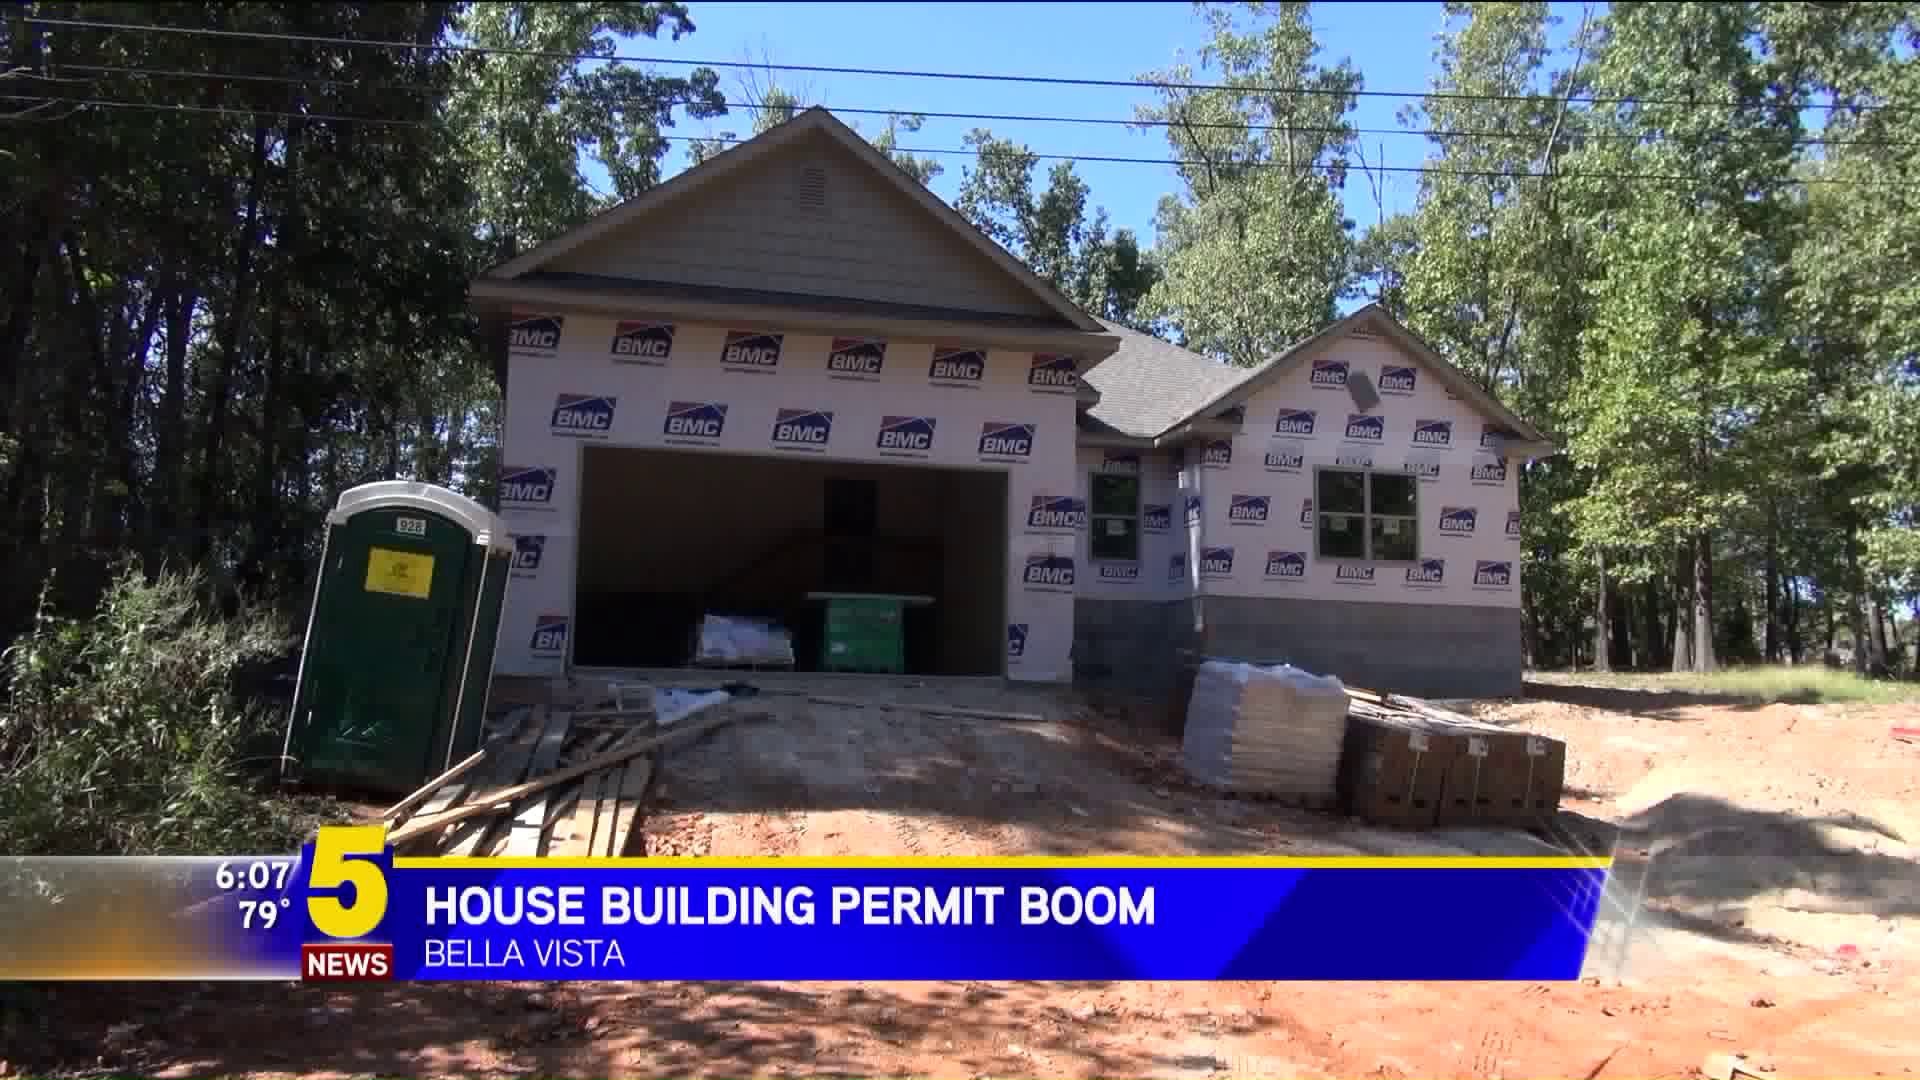 House Building Permit Boom